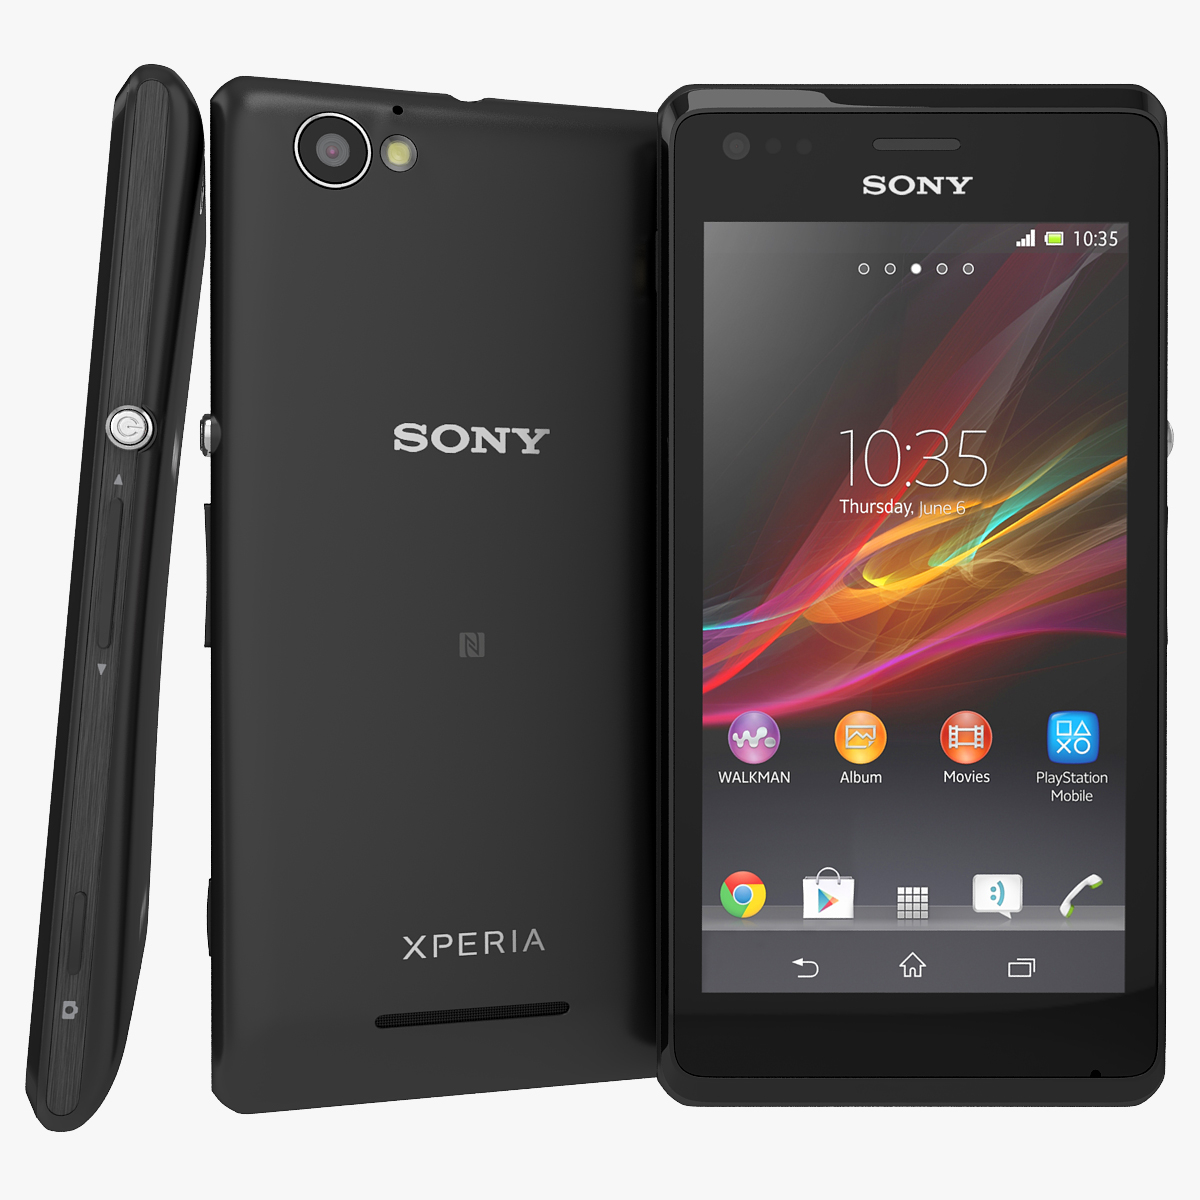 Xperia купить спб. Sony Xperia c2005. Sony Xperia m c2005. Sony Xperia c1905. Sony Xperia c6503.